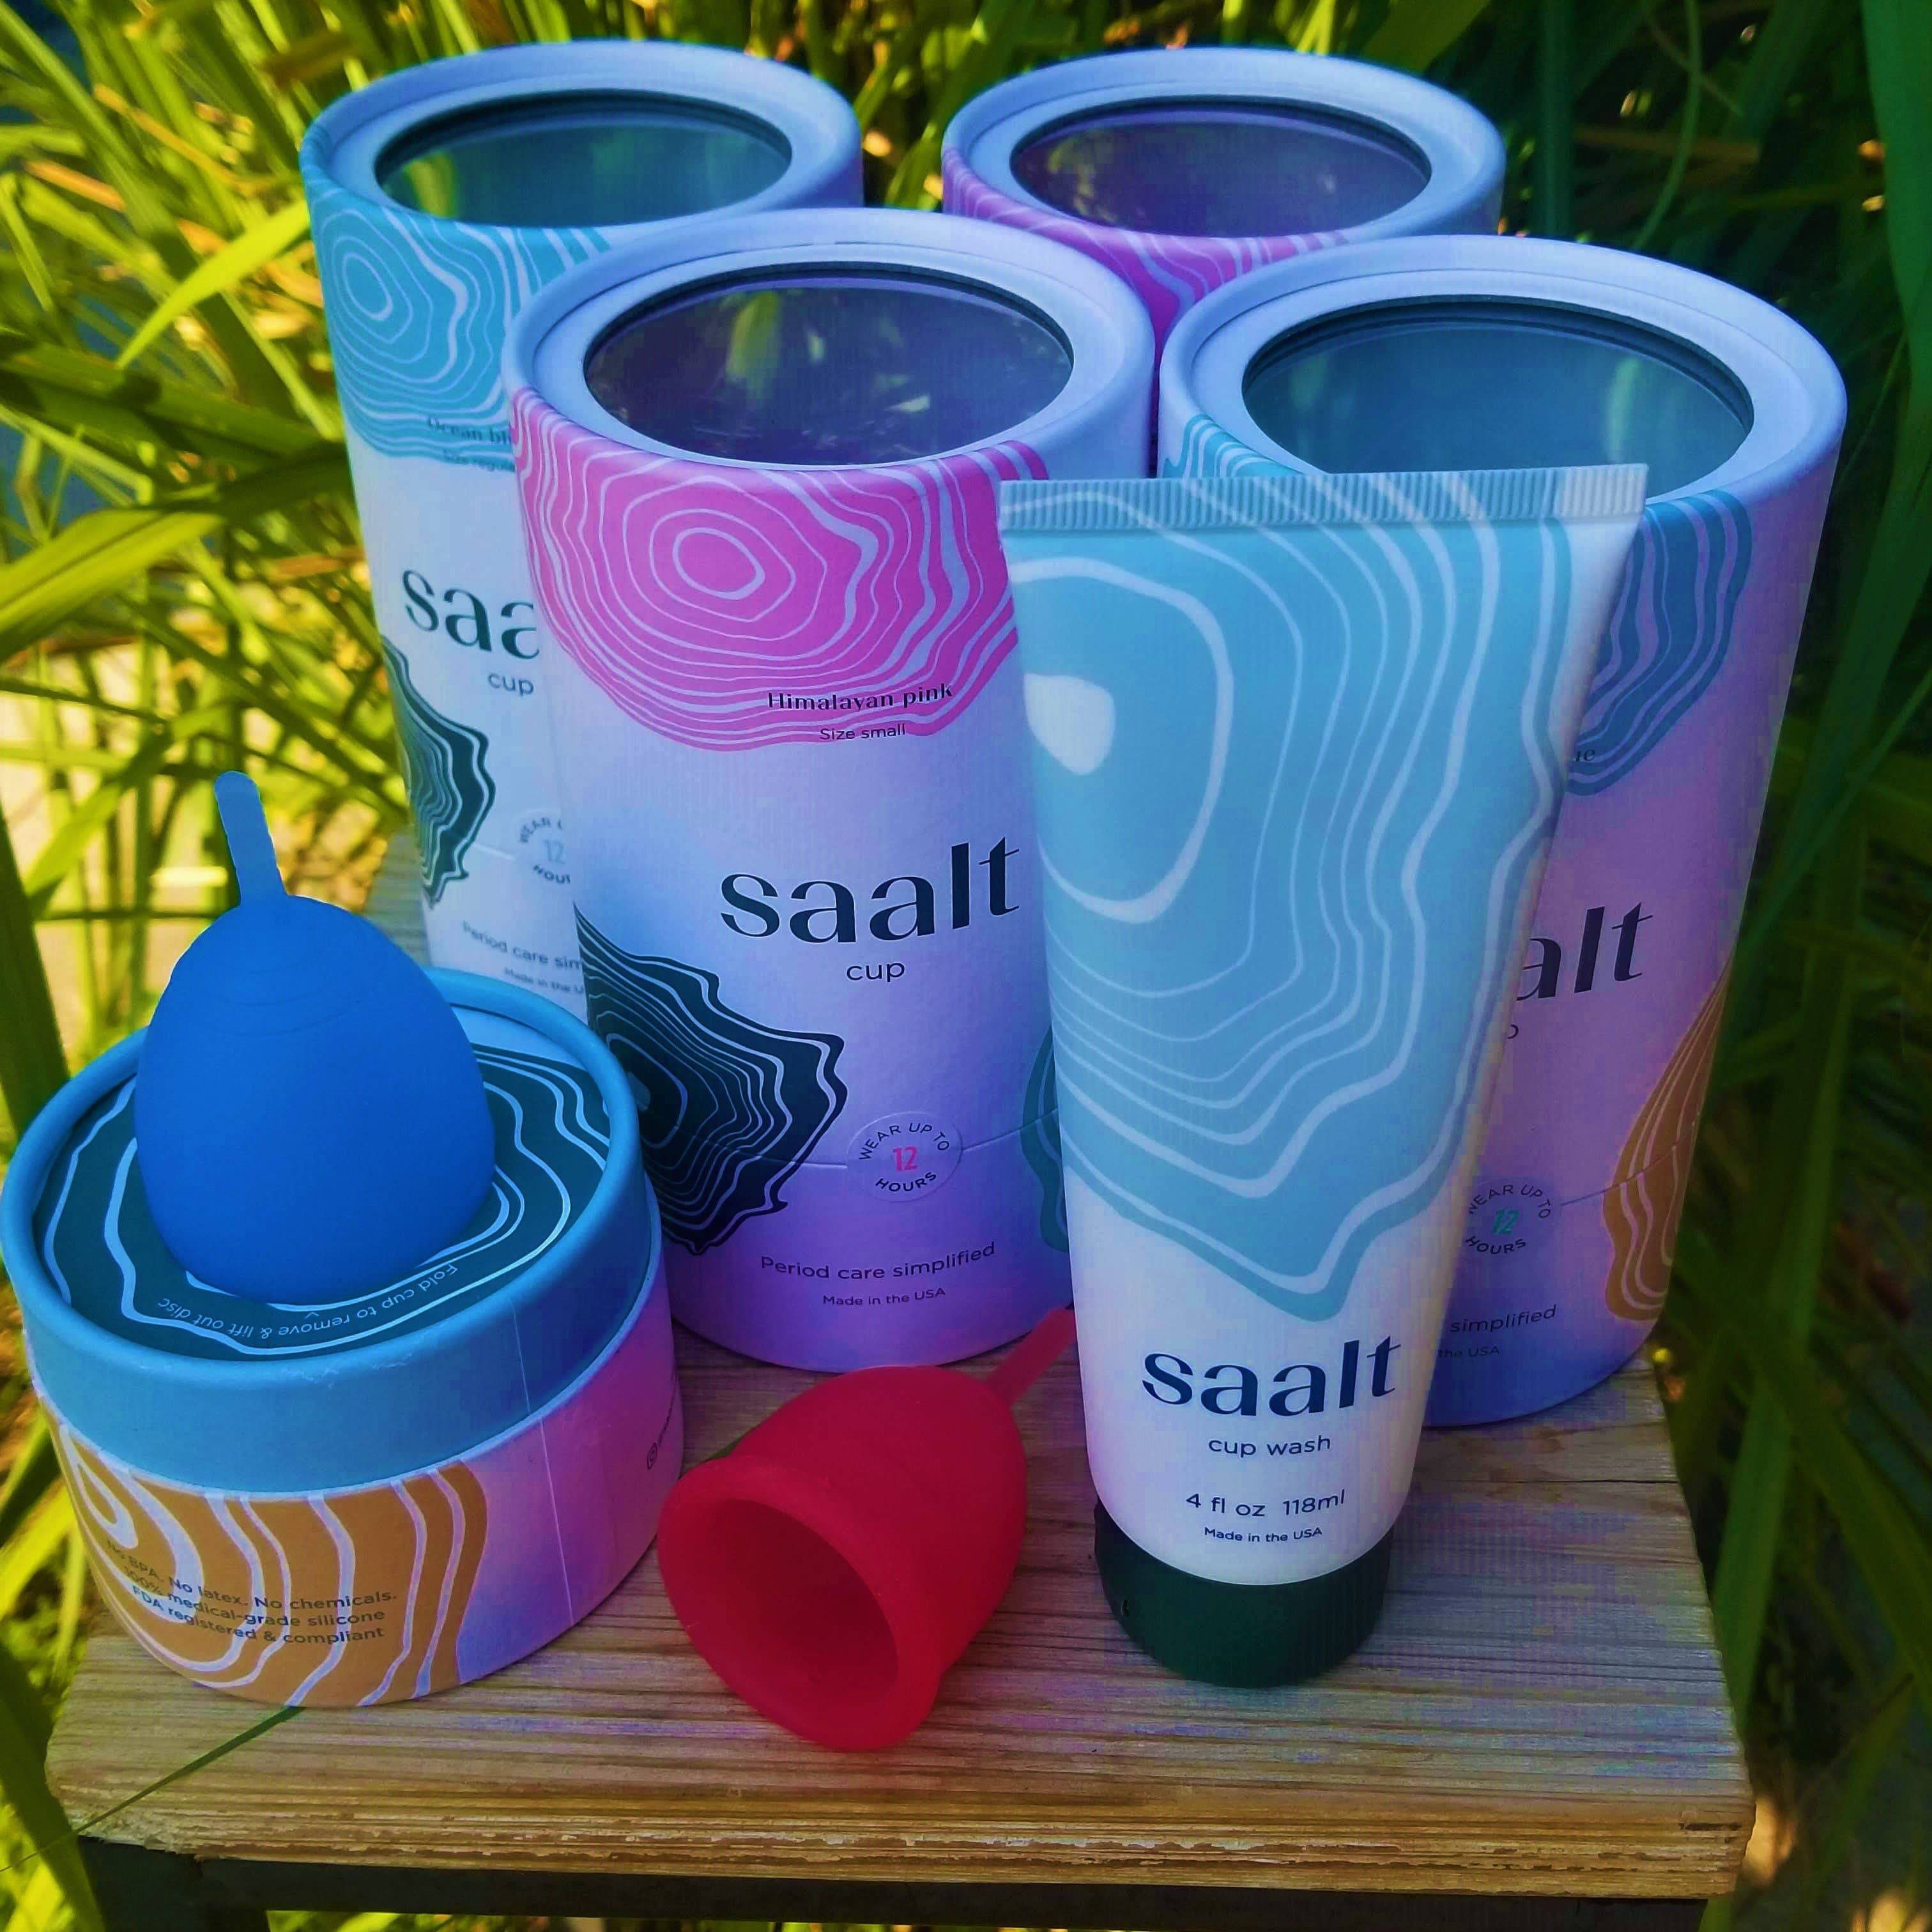 Saalt Menstrual Cup Small Soft / Desert Blush